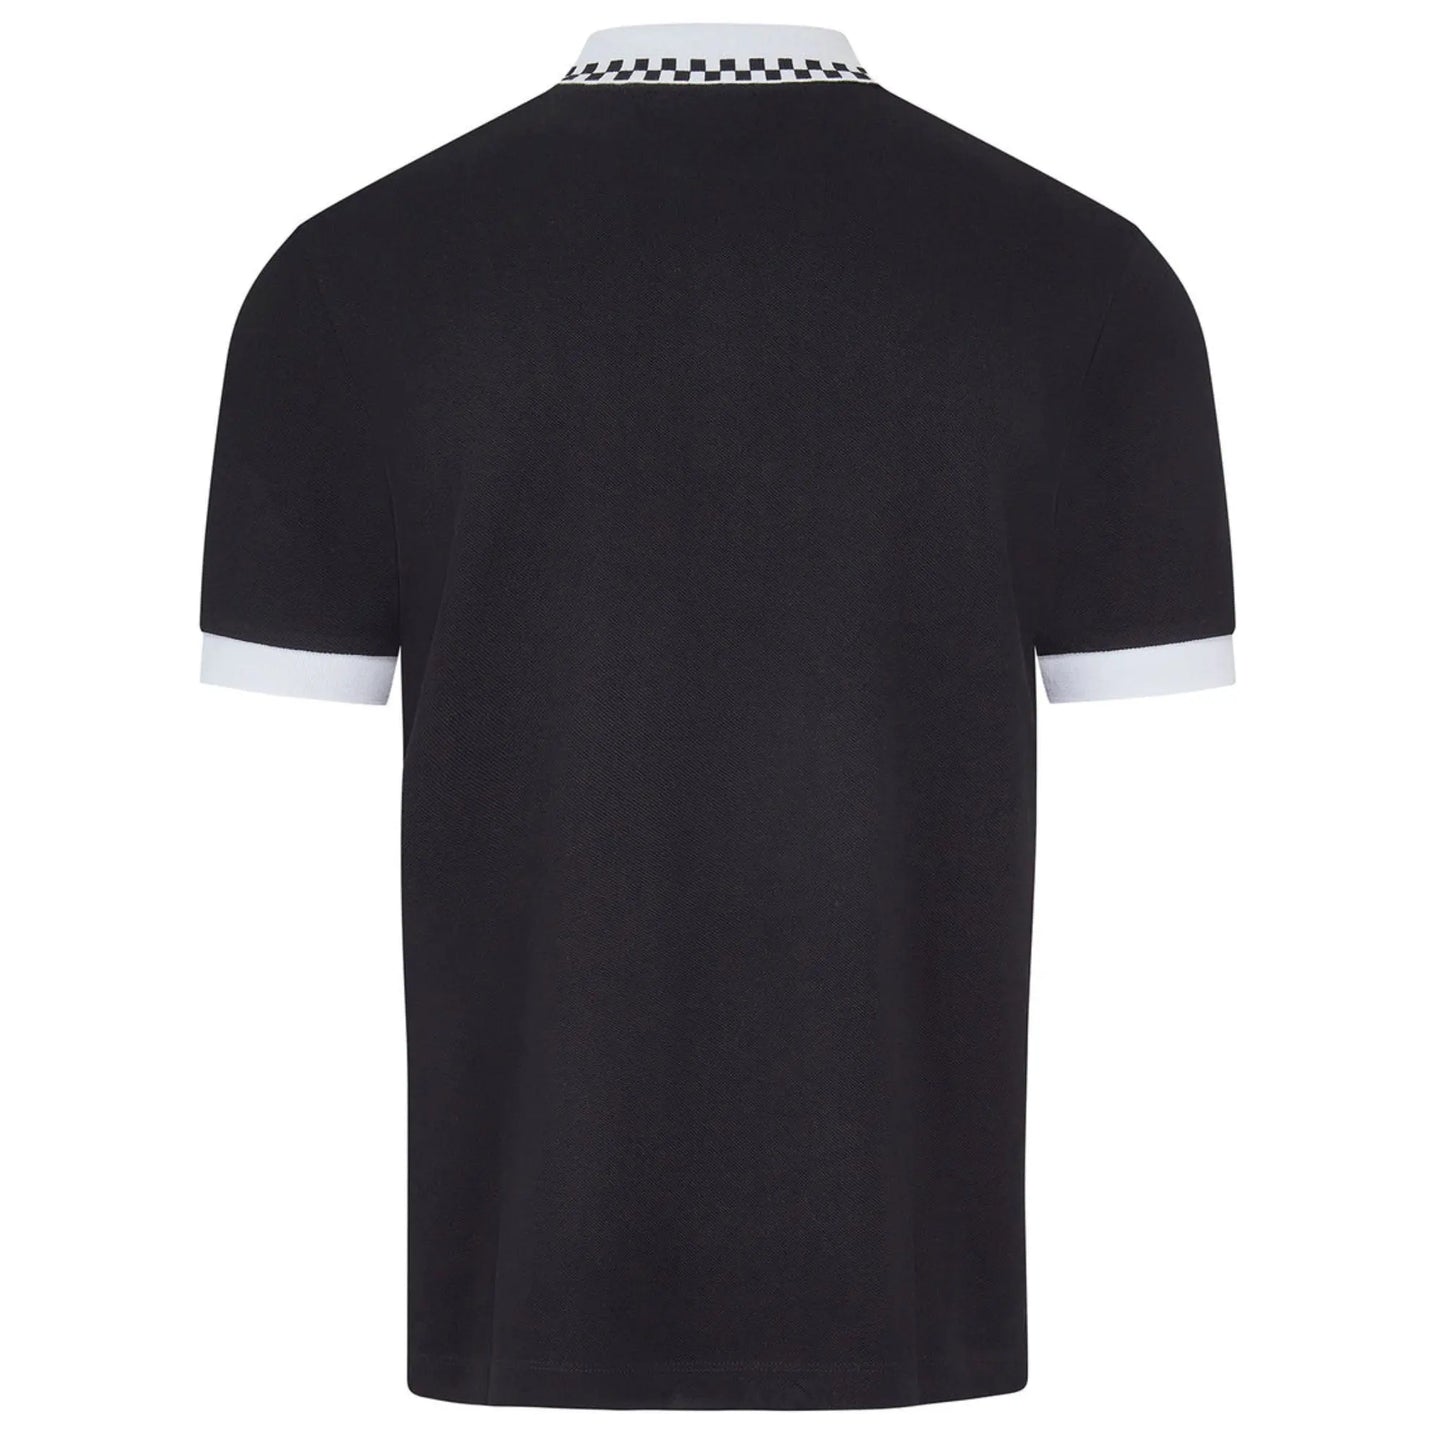 Buy Merc London Nova Polo - Black | Short-Sleeved Polo Shirtss at Woven Durham